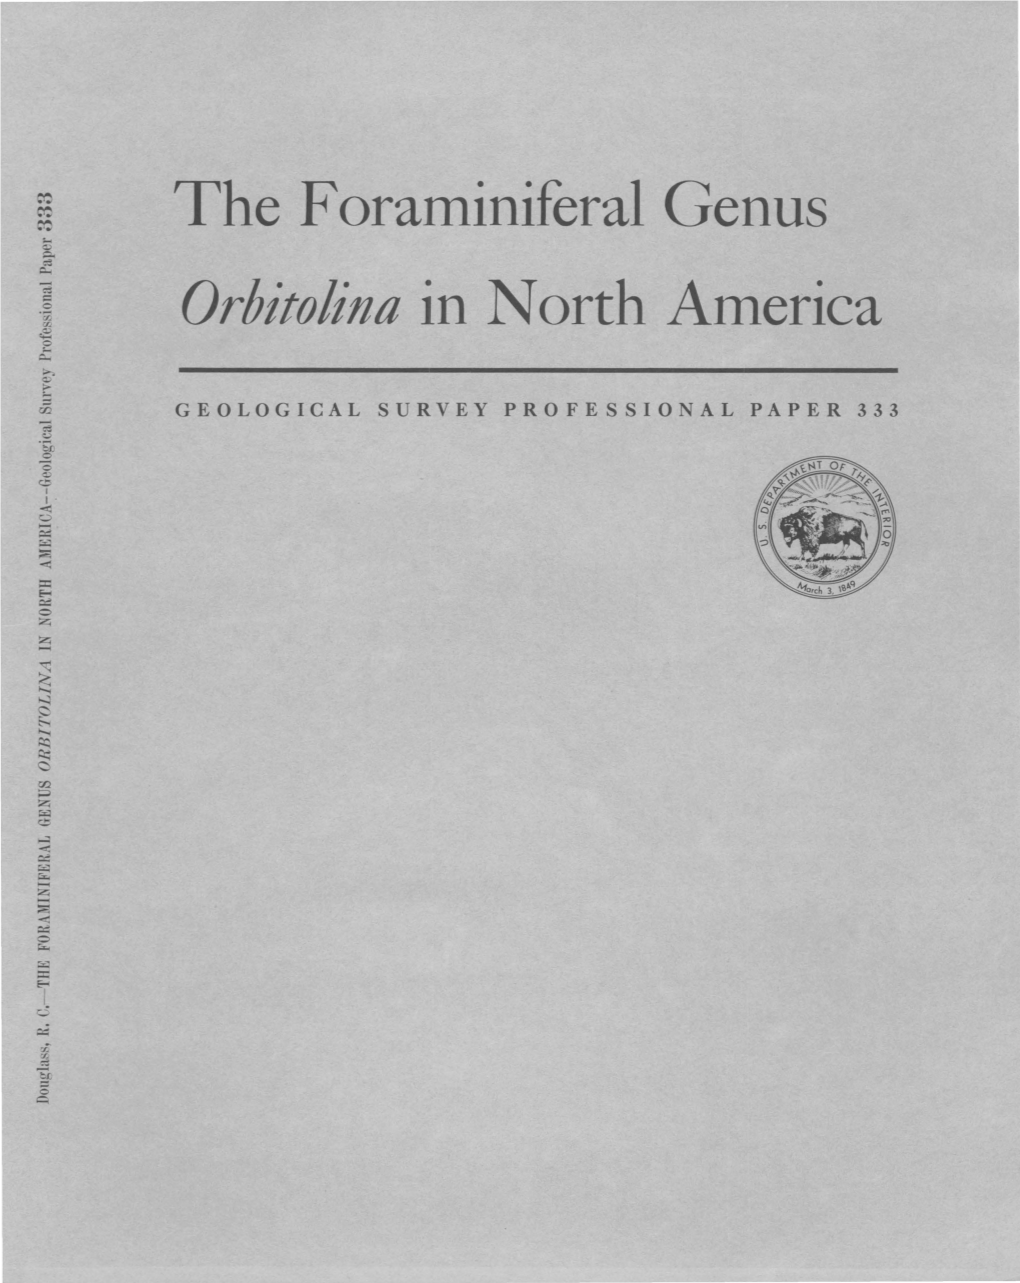 The Foraminiferal Genus 1 Orbitolina in North America ~